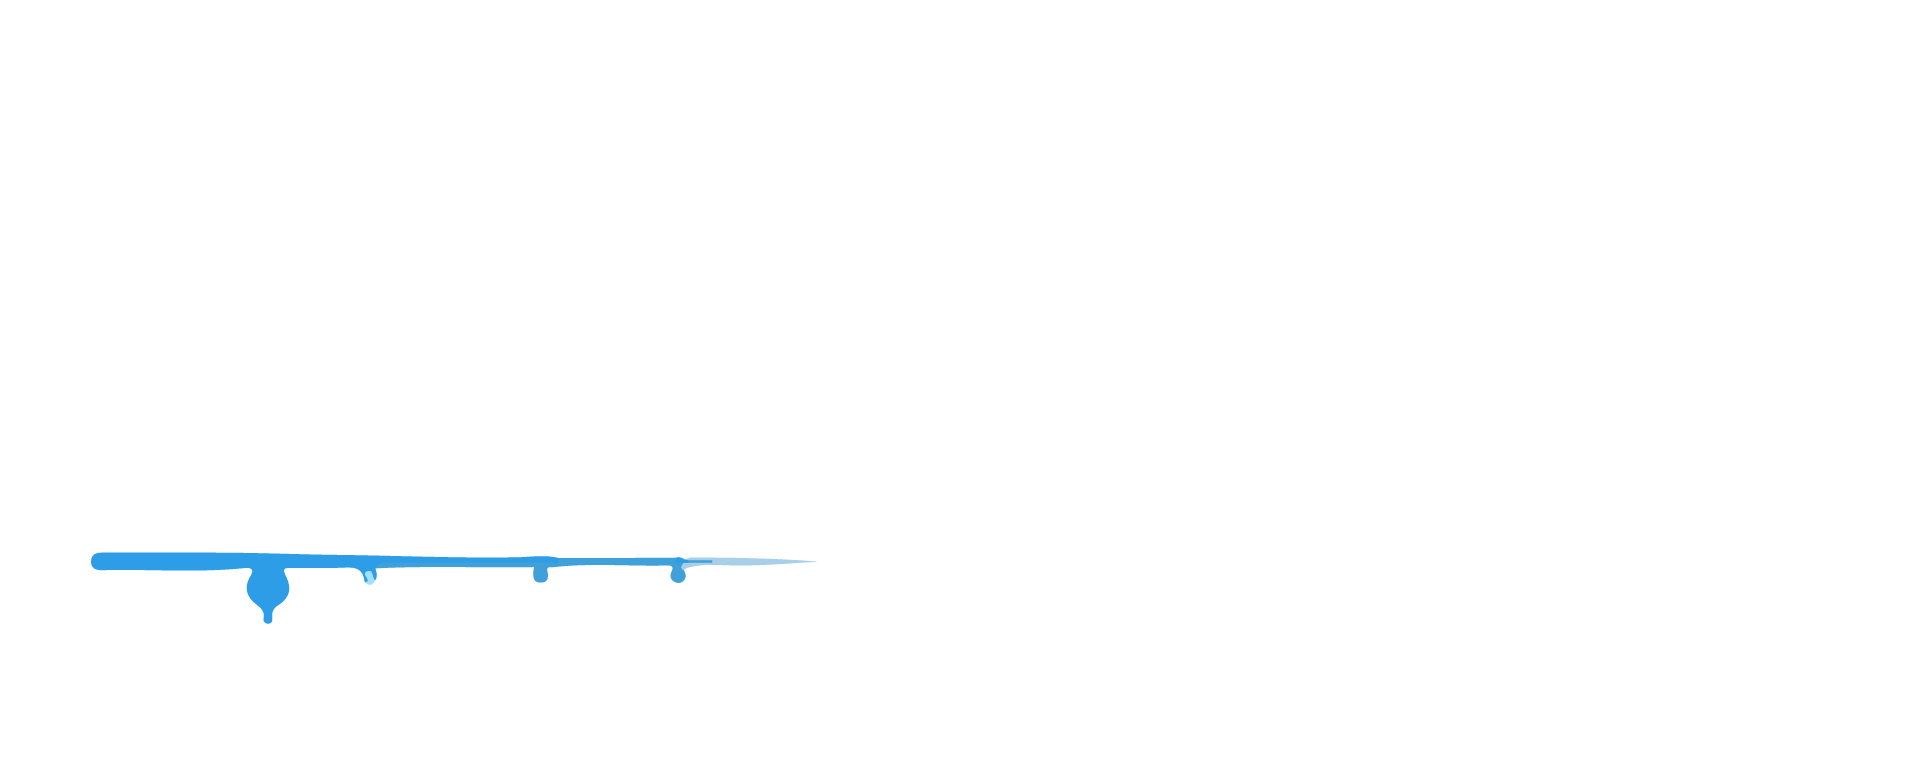 Churchville Outfitters